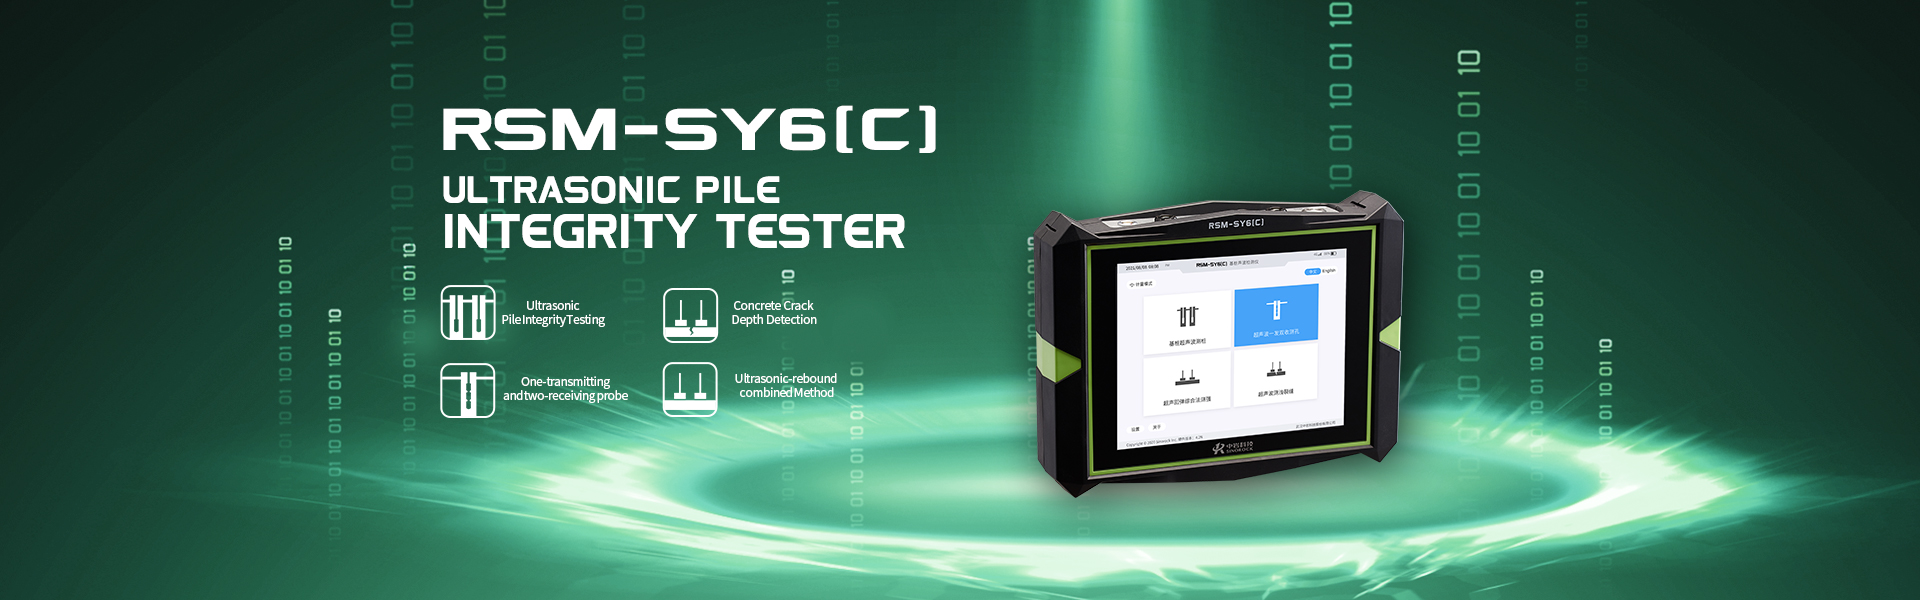 RSM-SY6 (C) Ultrasonic Pile Integrity Tester